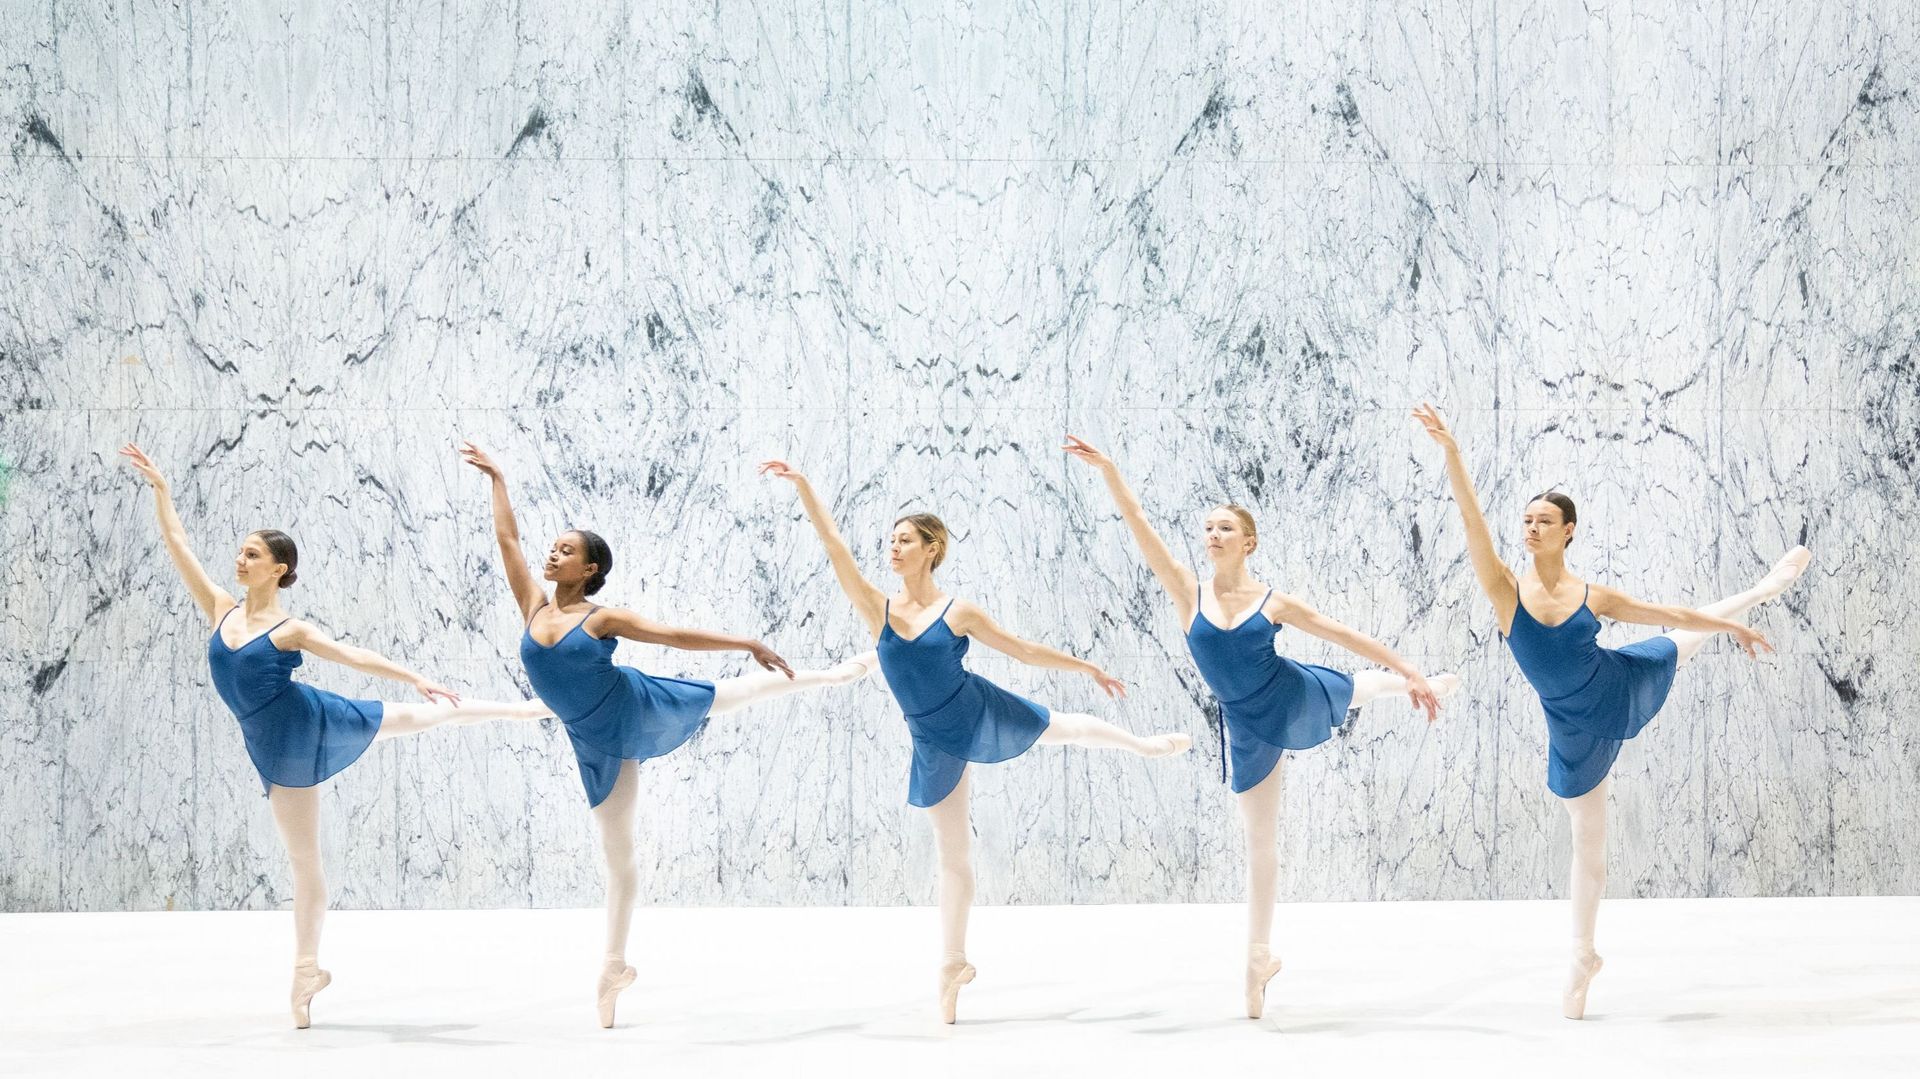 La Mosa Ballet School ouvrira ses portes en septembre 2022 